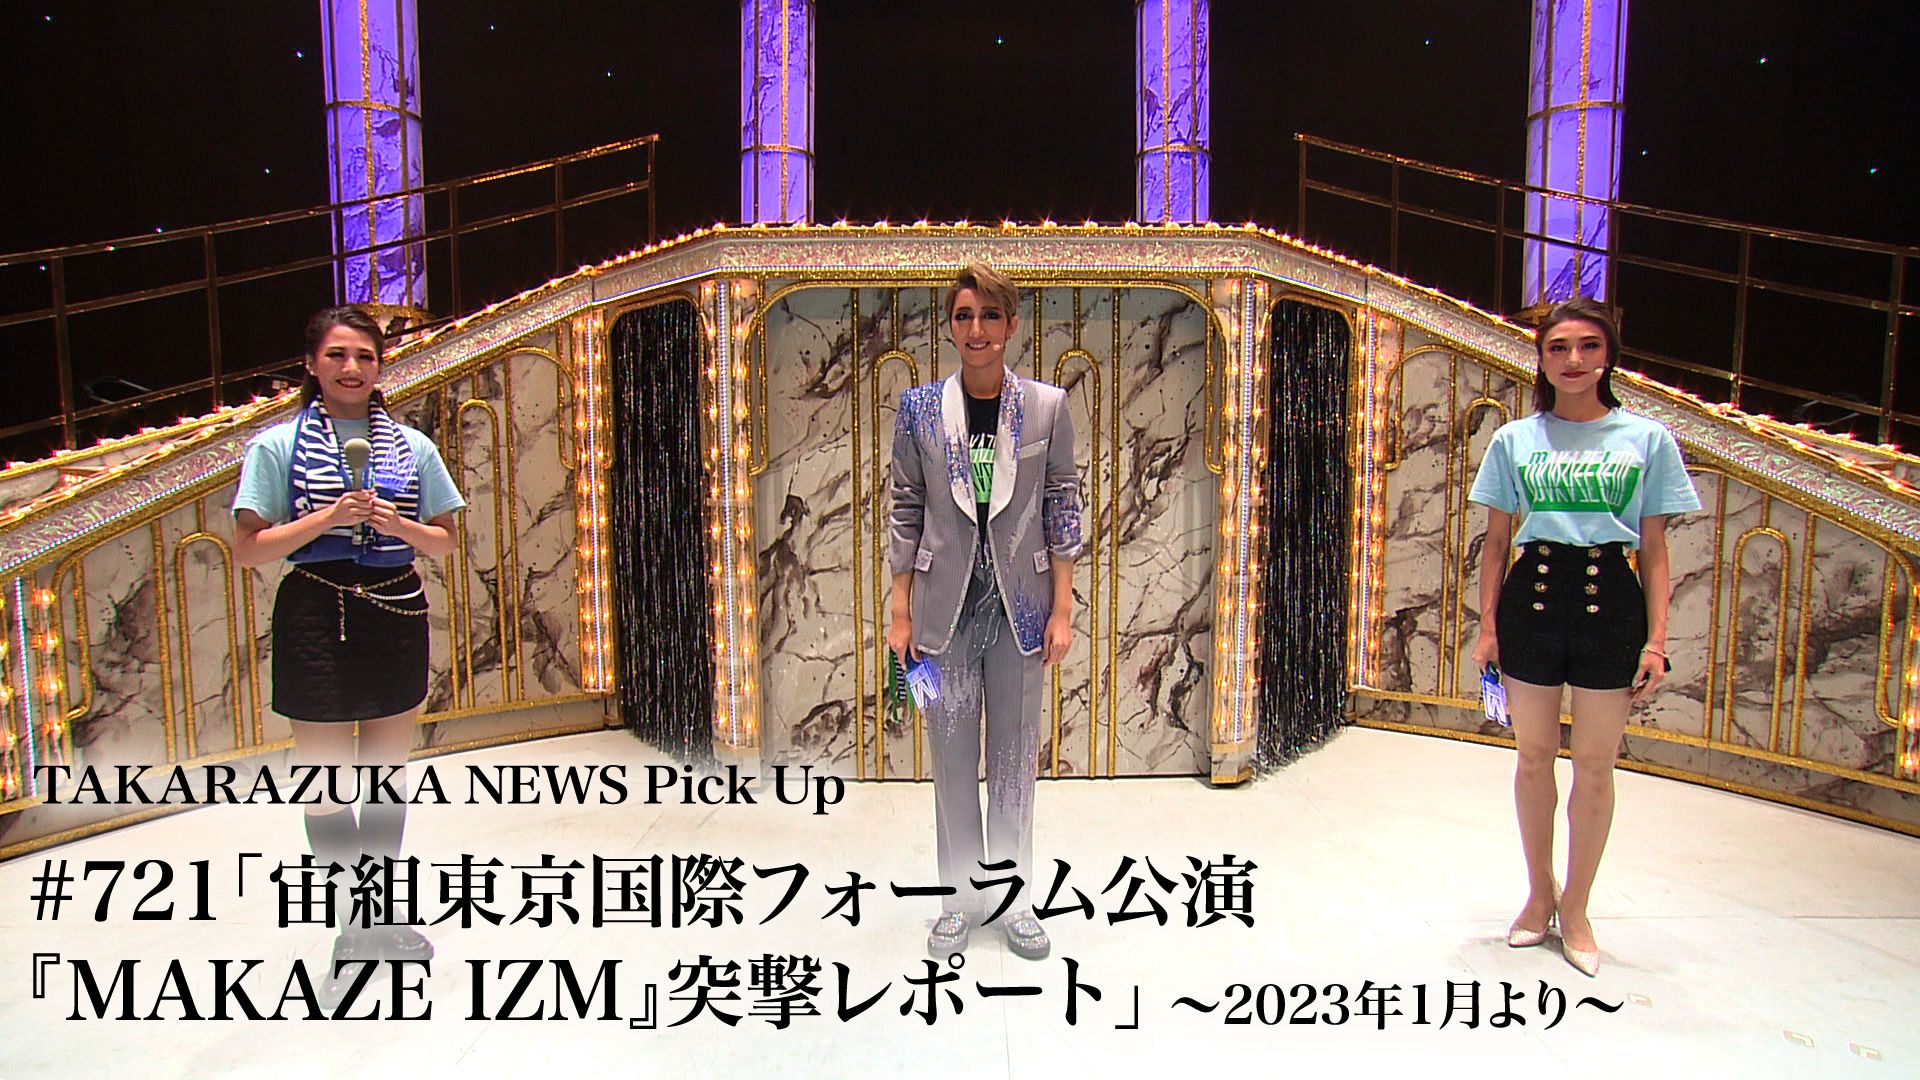 TAKARAZUKA NEWS Pick Up #721「宙組東京国際フォーラム公演『MAKAZE IZM』突撃レポート」〜2023年1月より〜